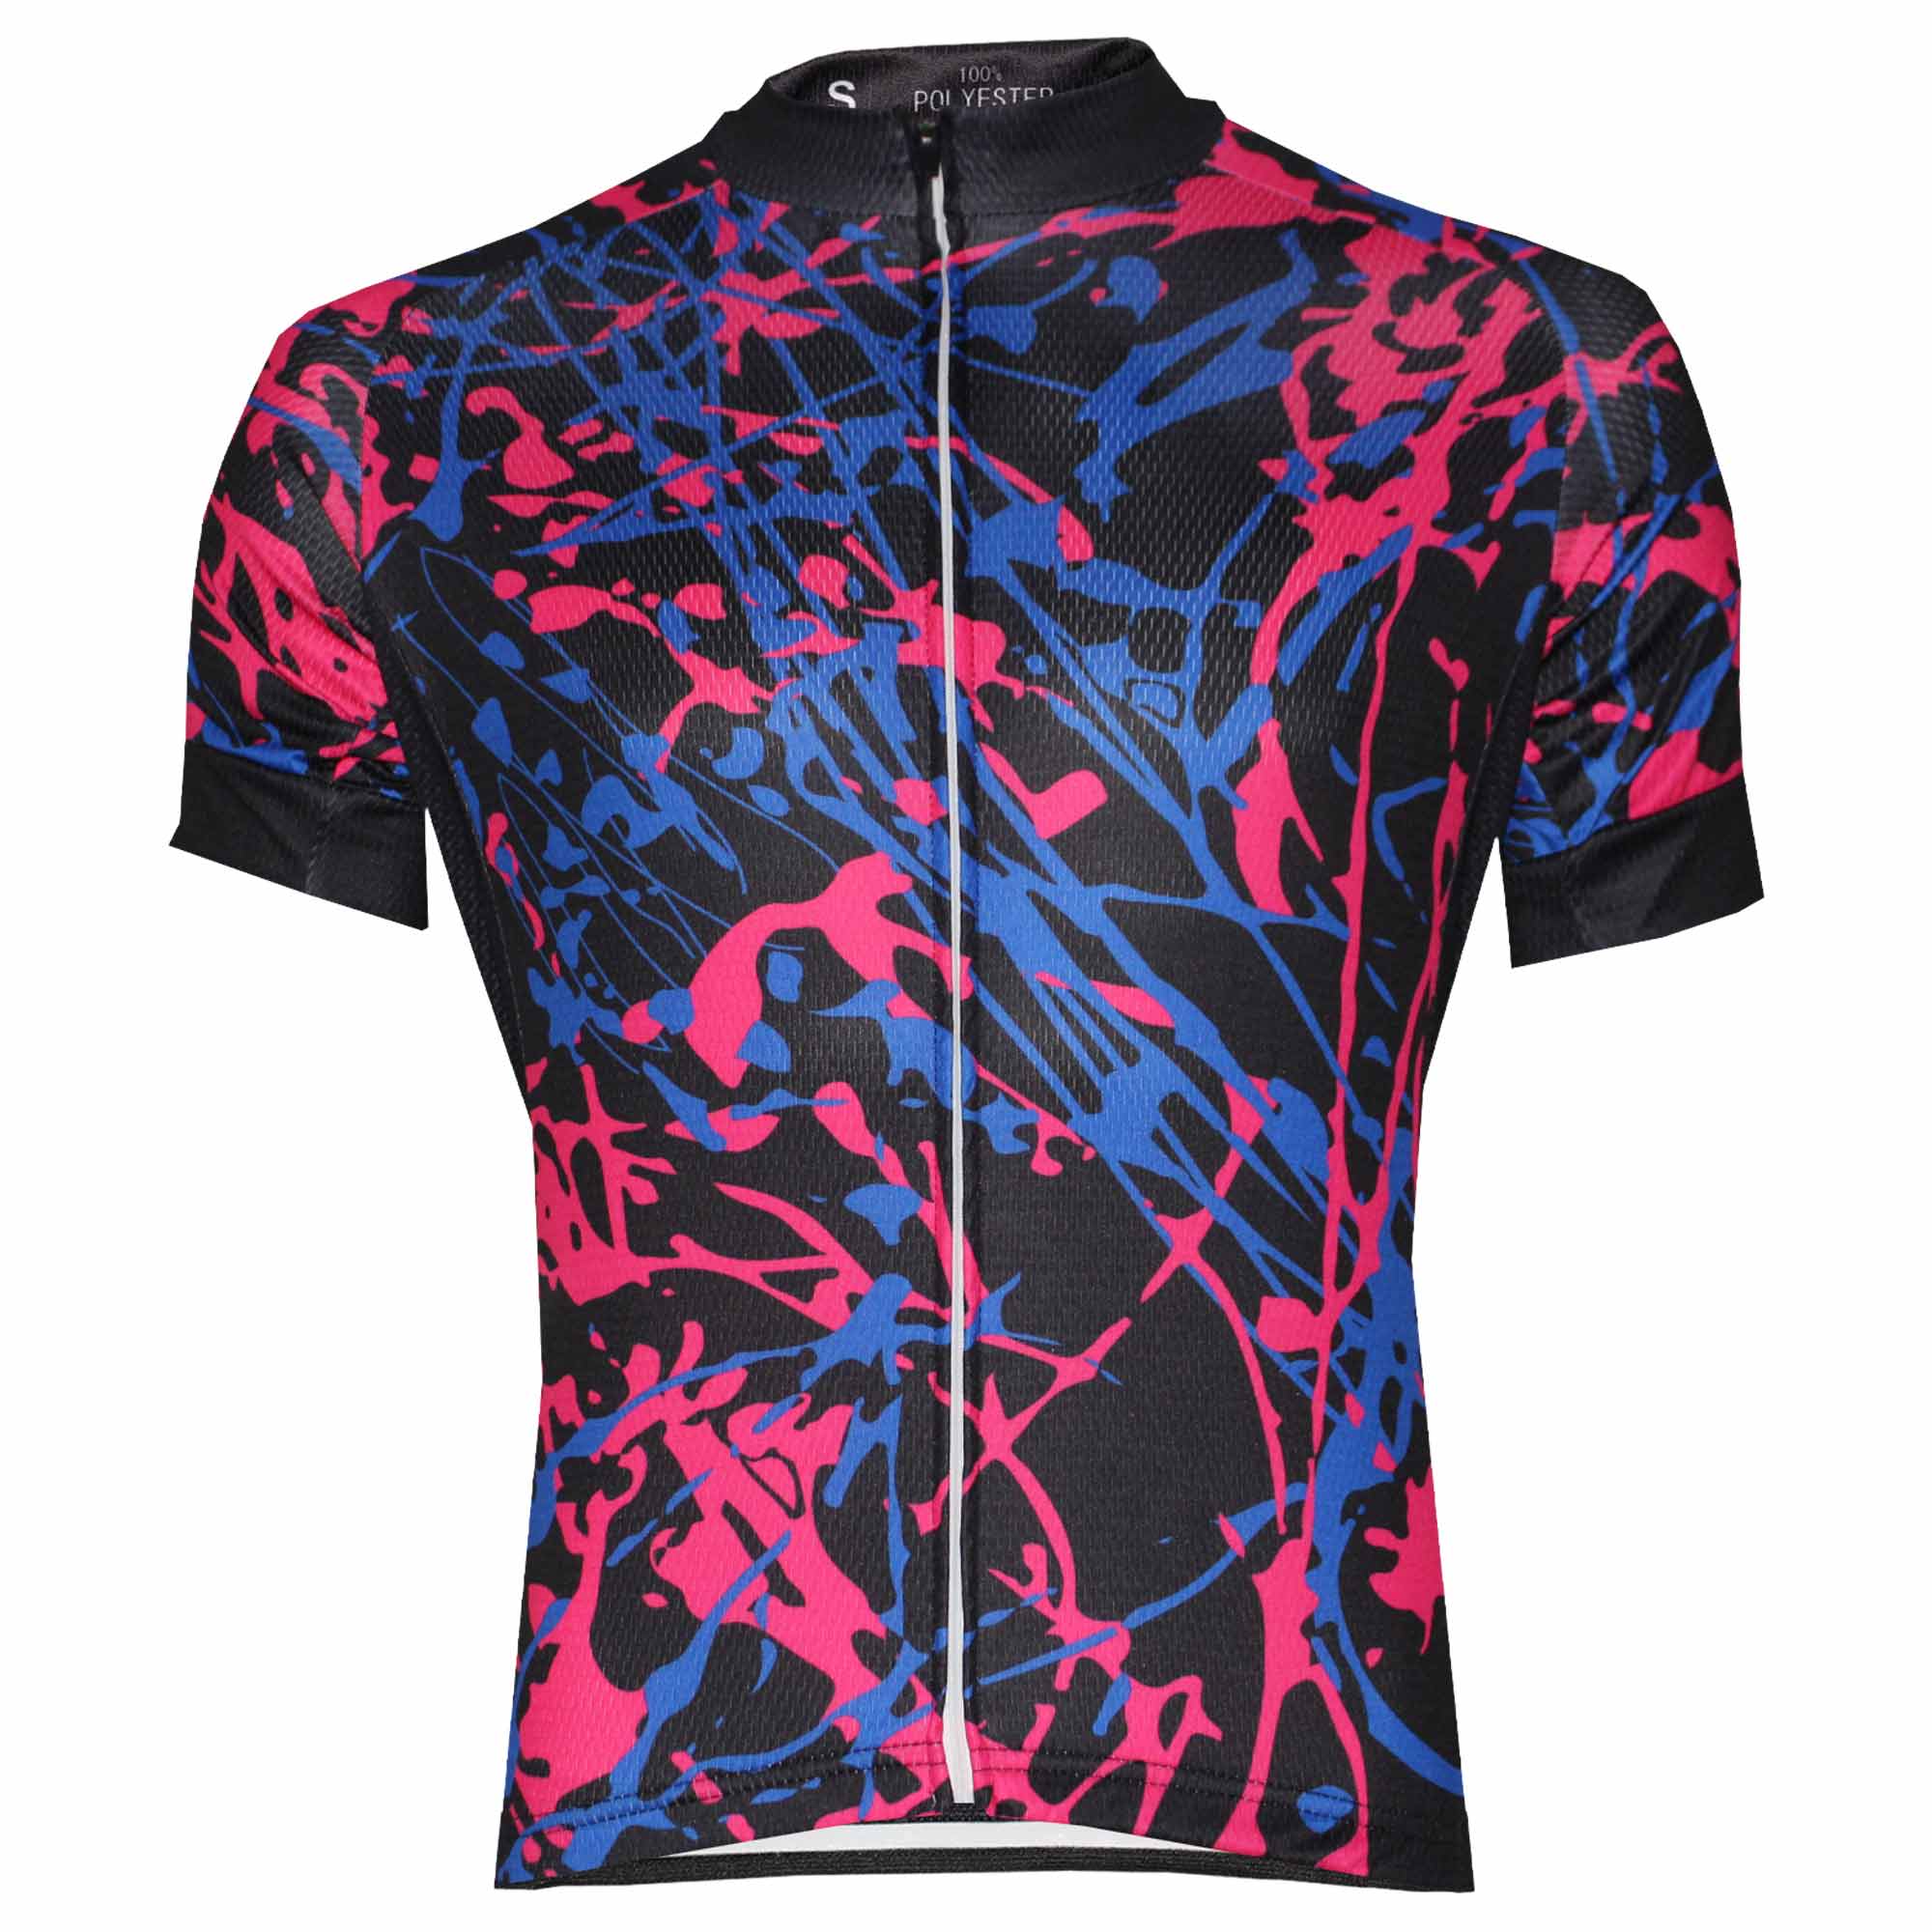 110 HHGG ideas  cycling outfit, cycling wear, cycling jerseys